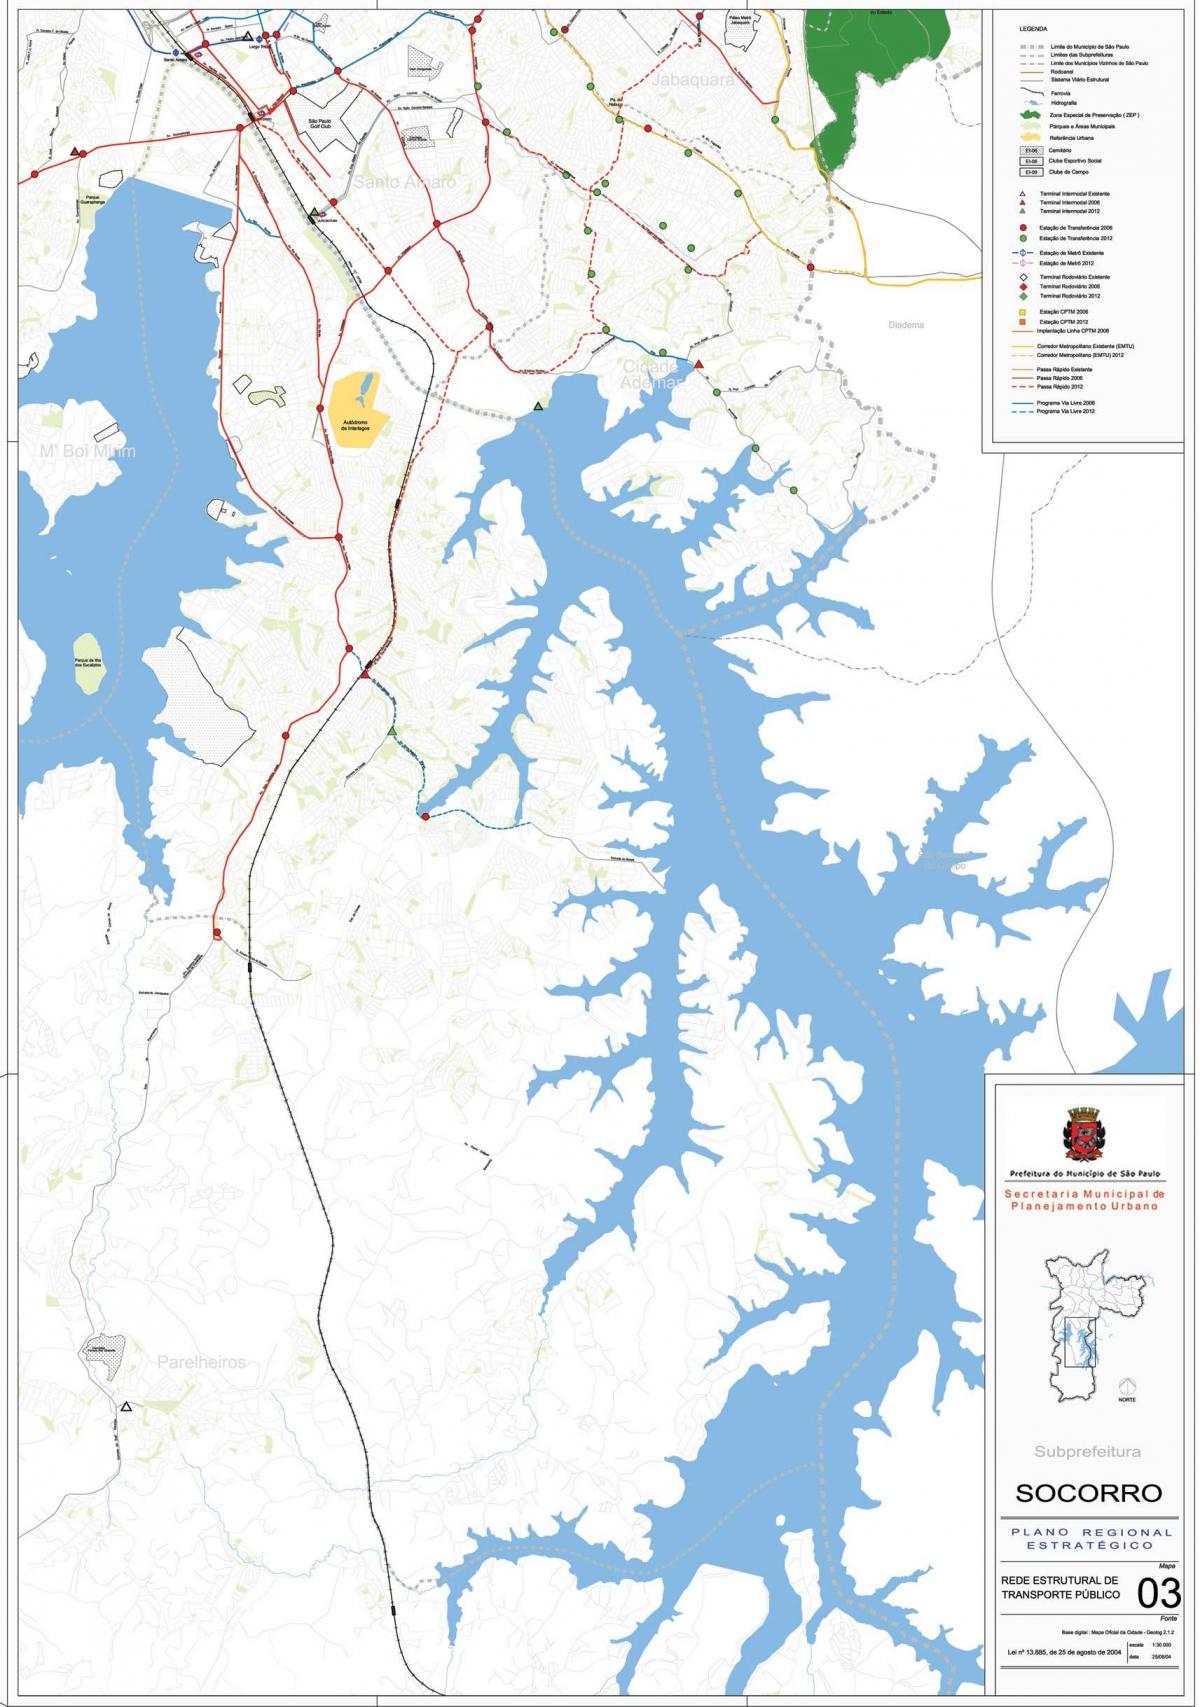 Capela do Socorro São Paulo haritası - Toplu taşıma